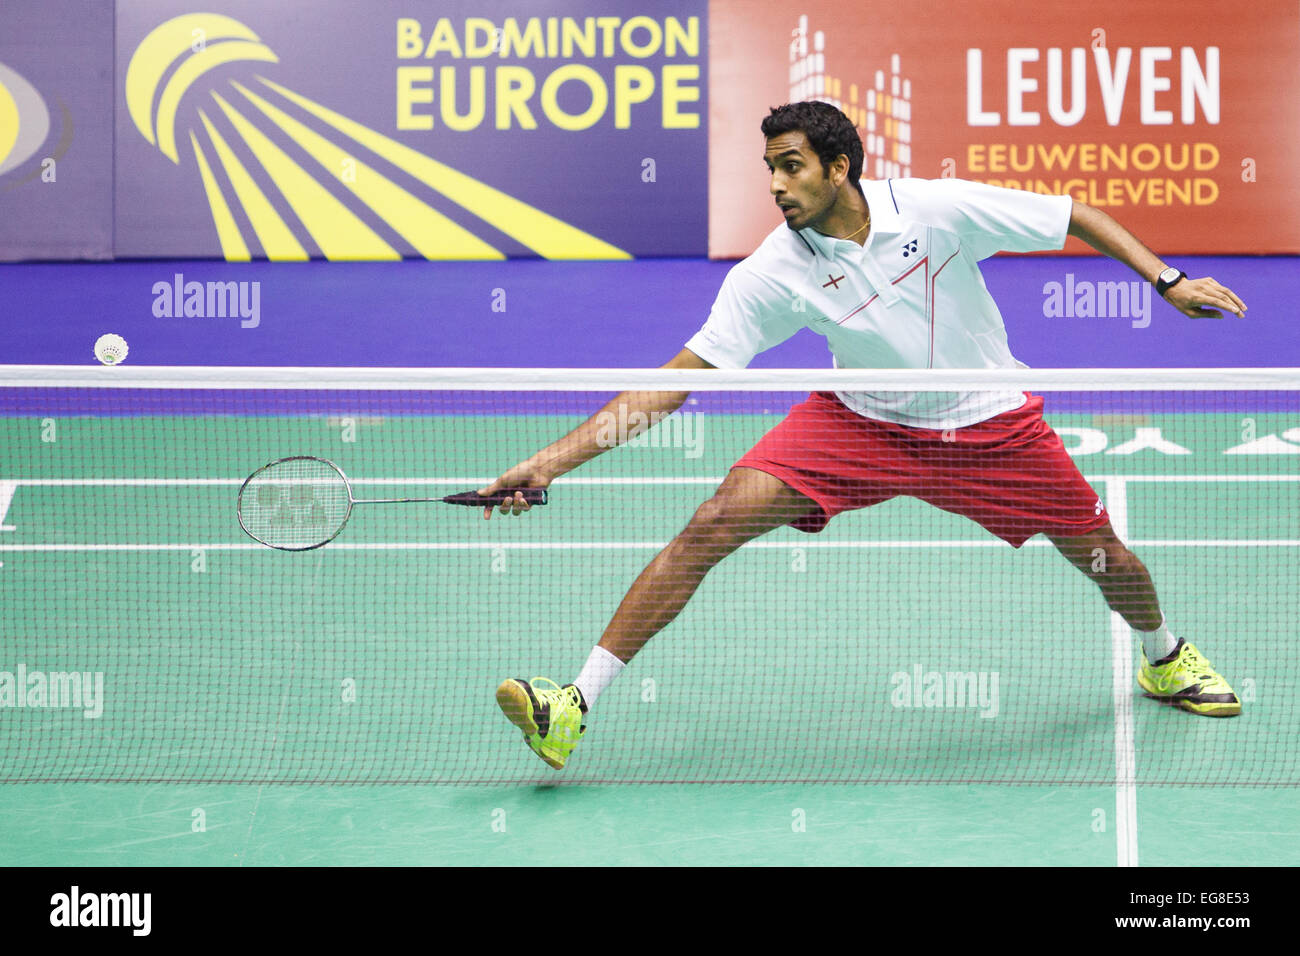 LEUVEN, BELGIUM, 14/02/2015. Badminton player Rajiv Ouseph (England, pictured) beats Vladimir Malkov (Russia) in the semi finals of the European Mixed Team Championships in Leuven, 2015. Stock Photo